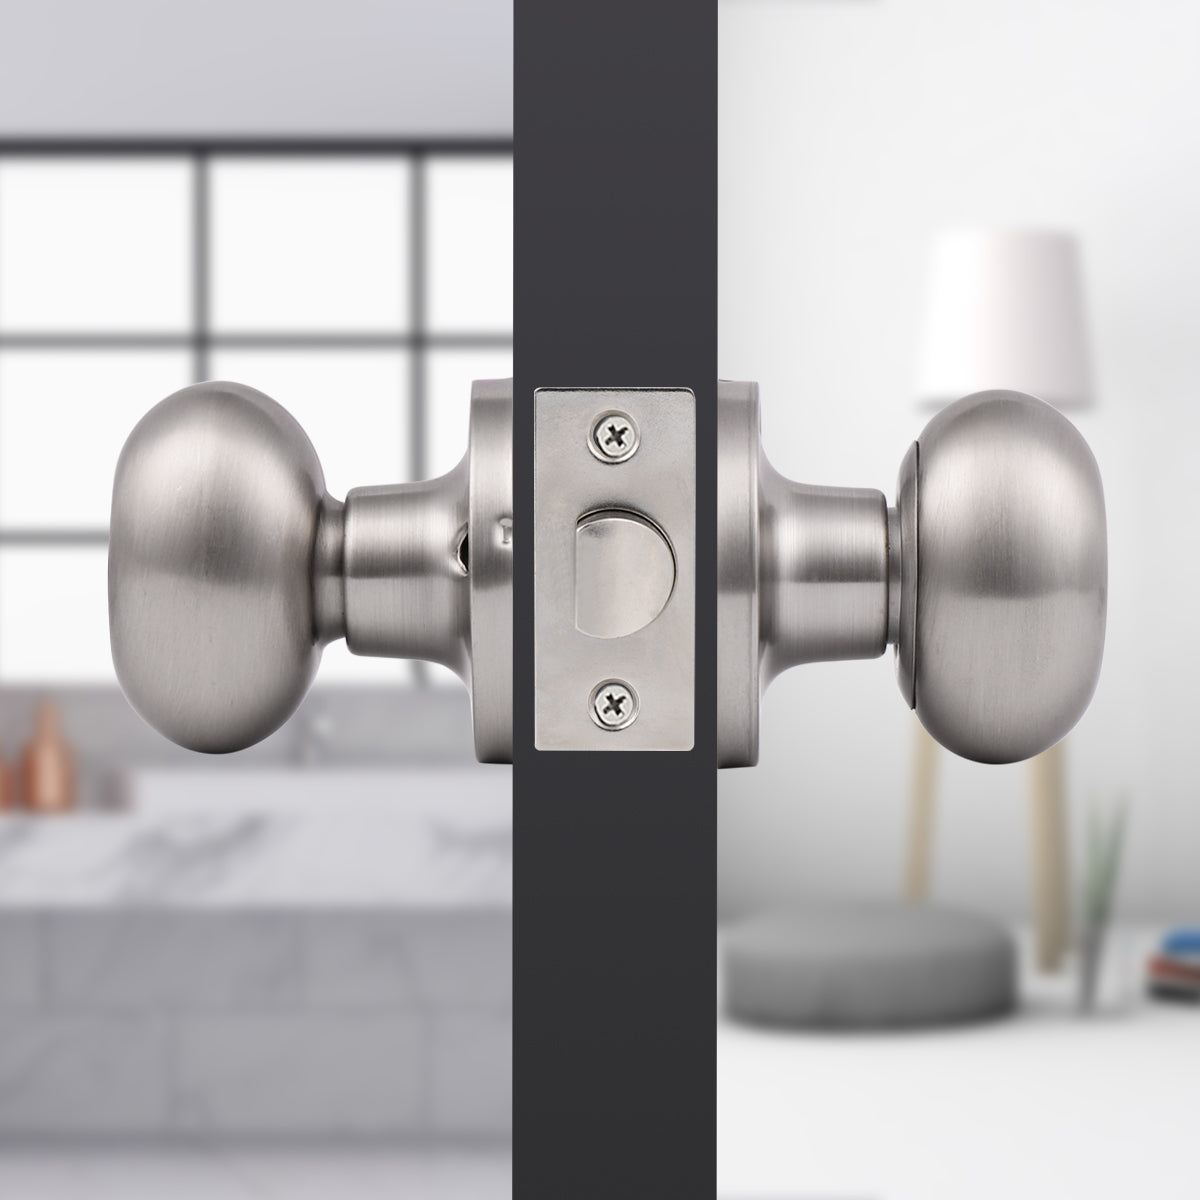 Privacy Door Knobs Bedroom/Bathroom Door Lock set No Key Egg Knob Style Satin Nickel Finish DL692SNBK